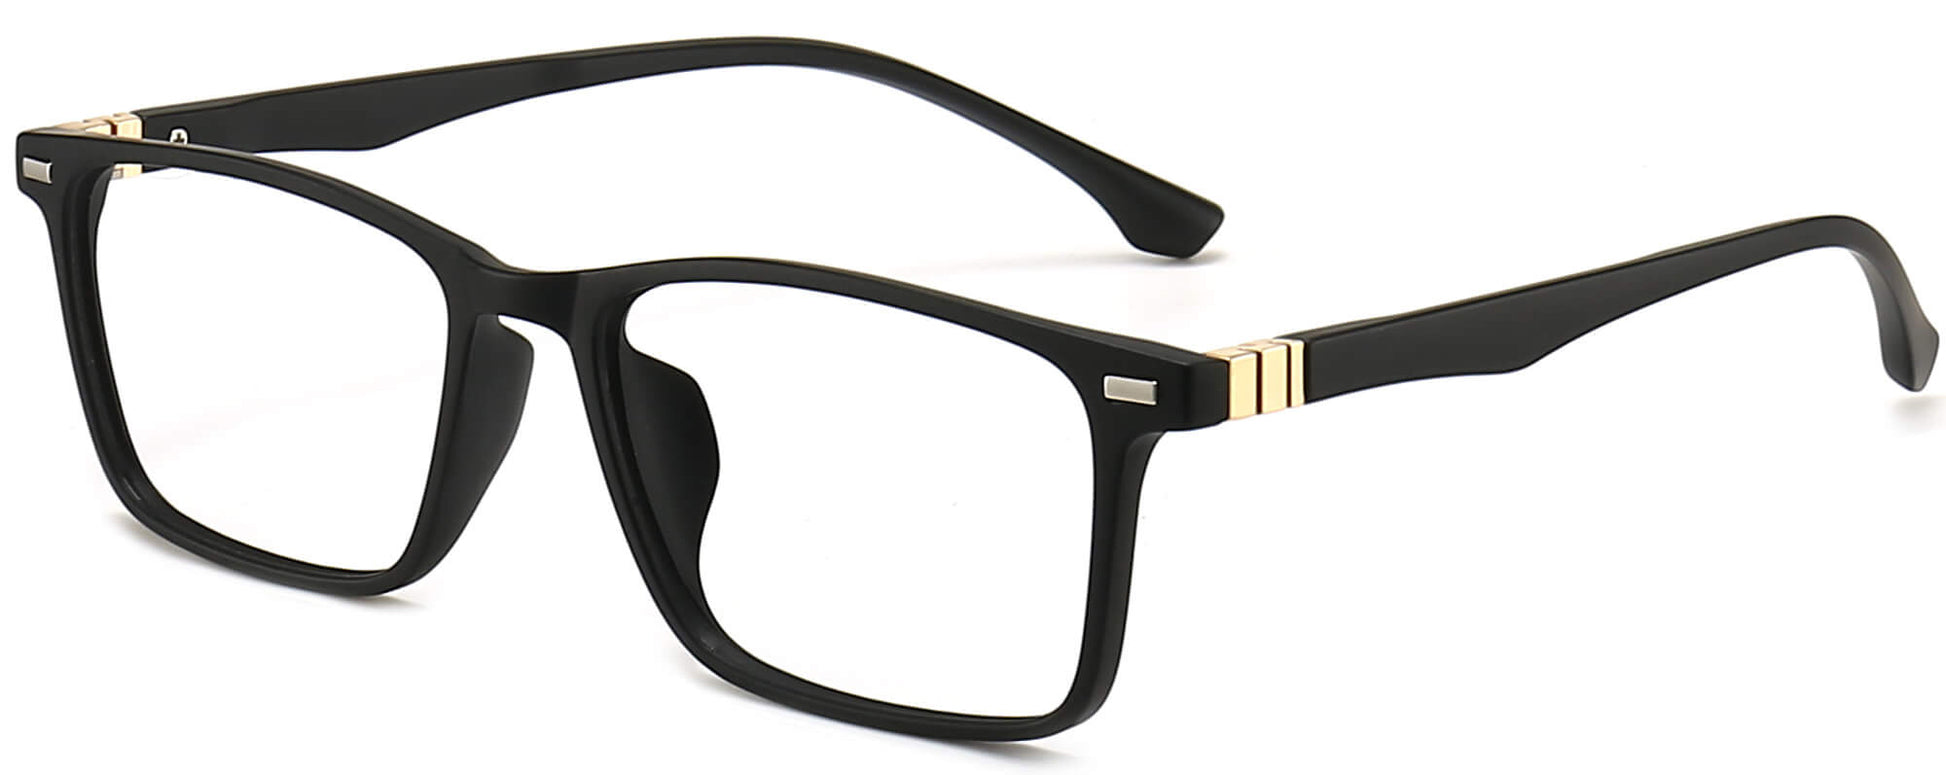 Victor Rectangle Black Eyeglasses rom ANRRI, angle view